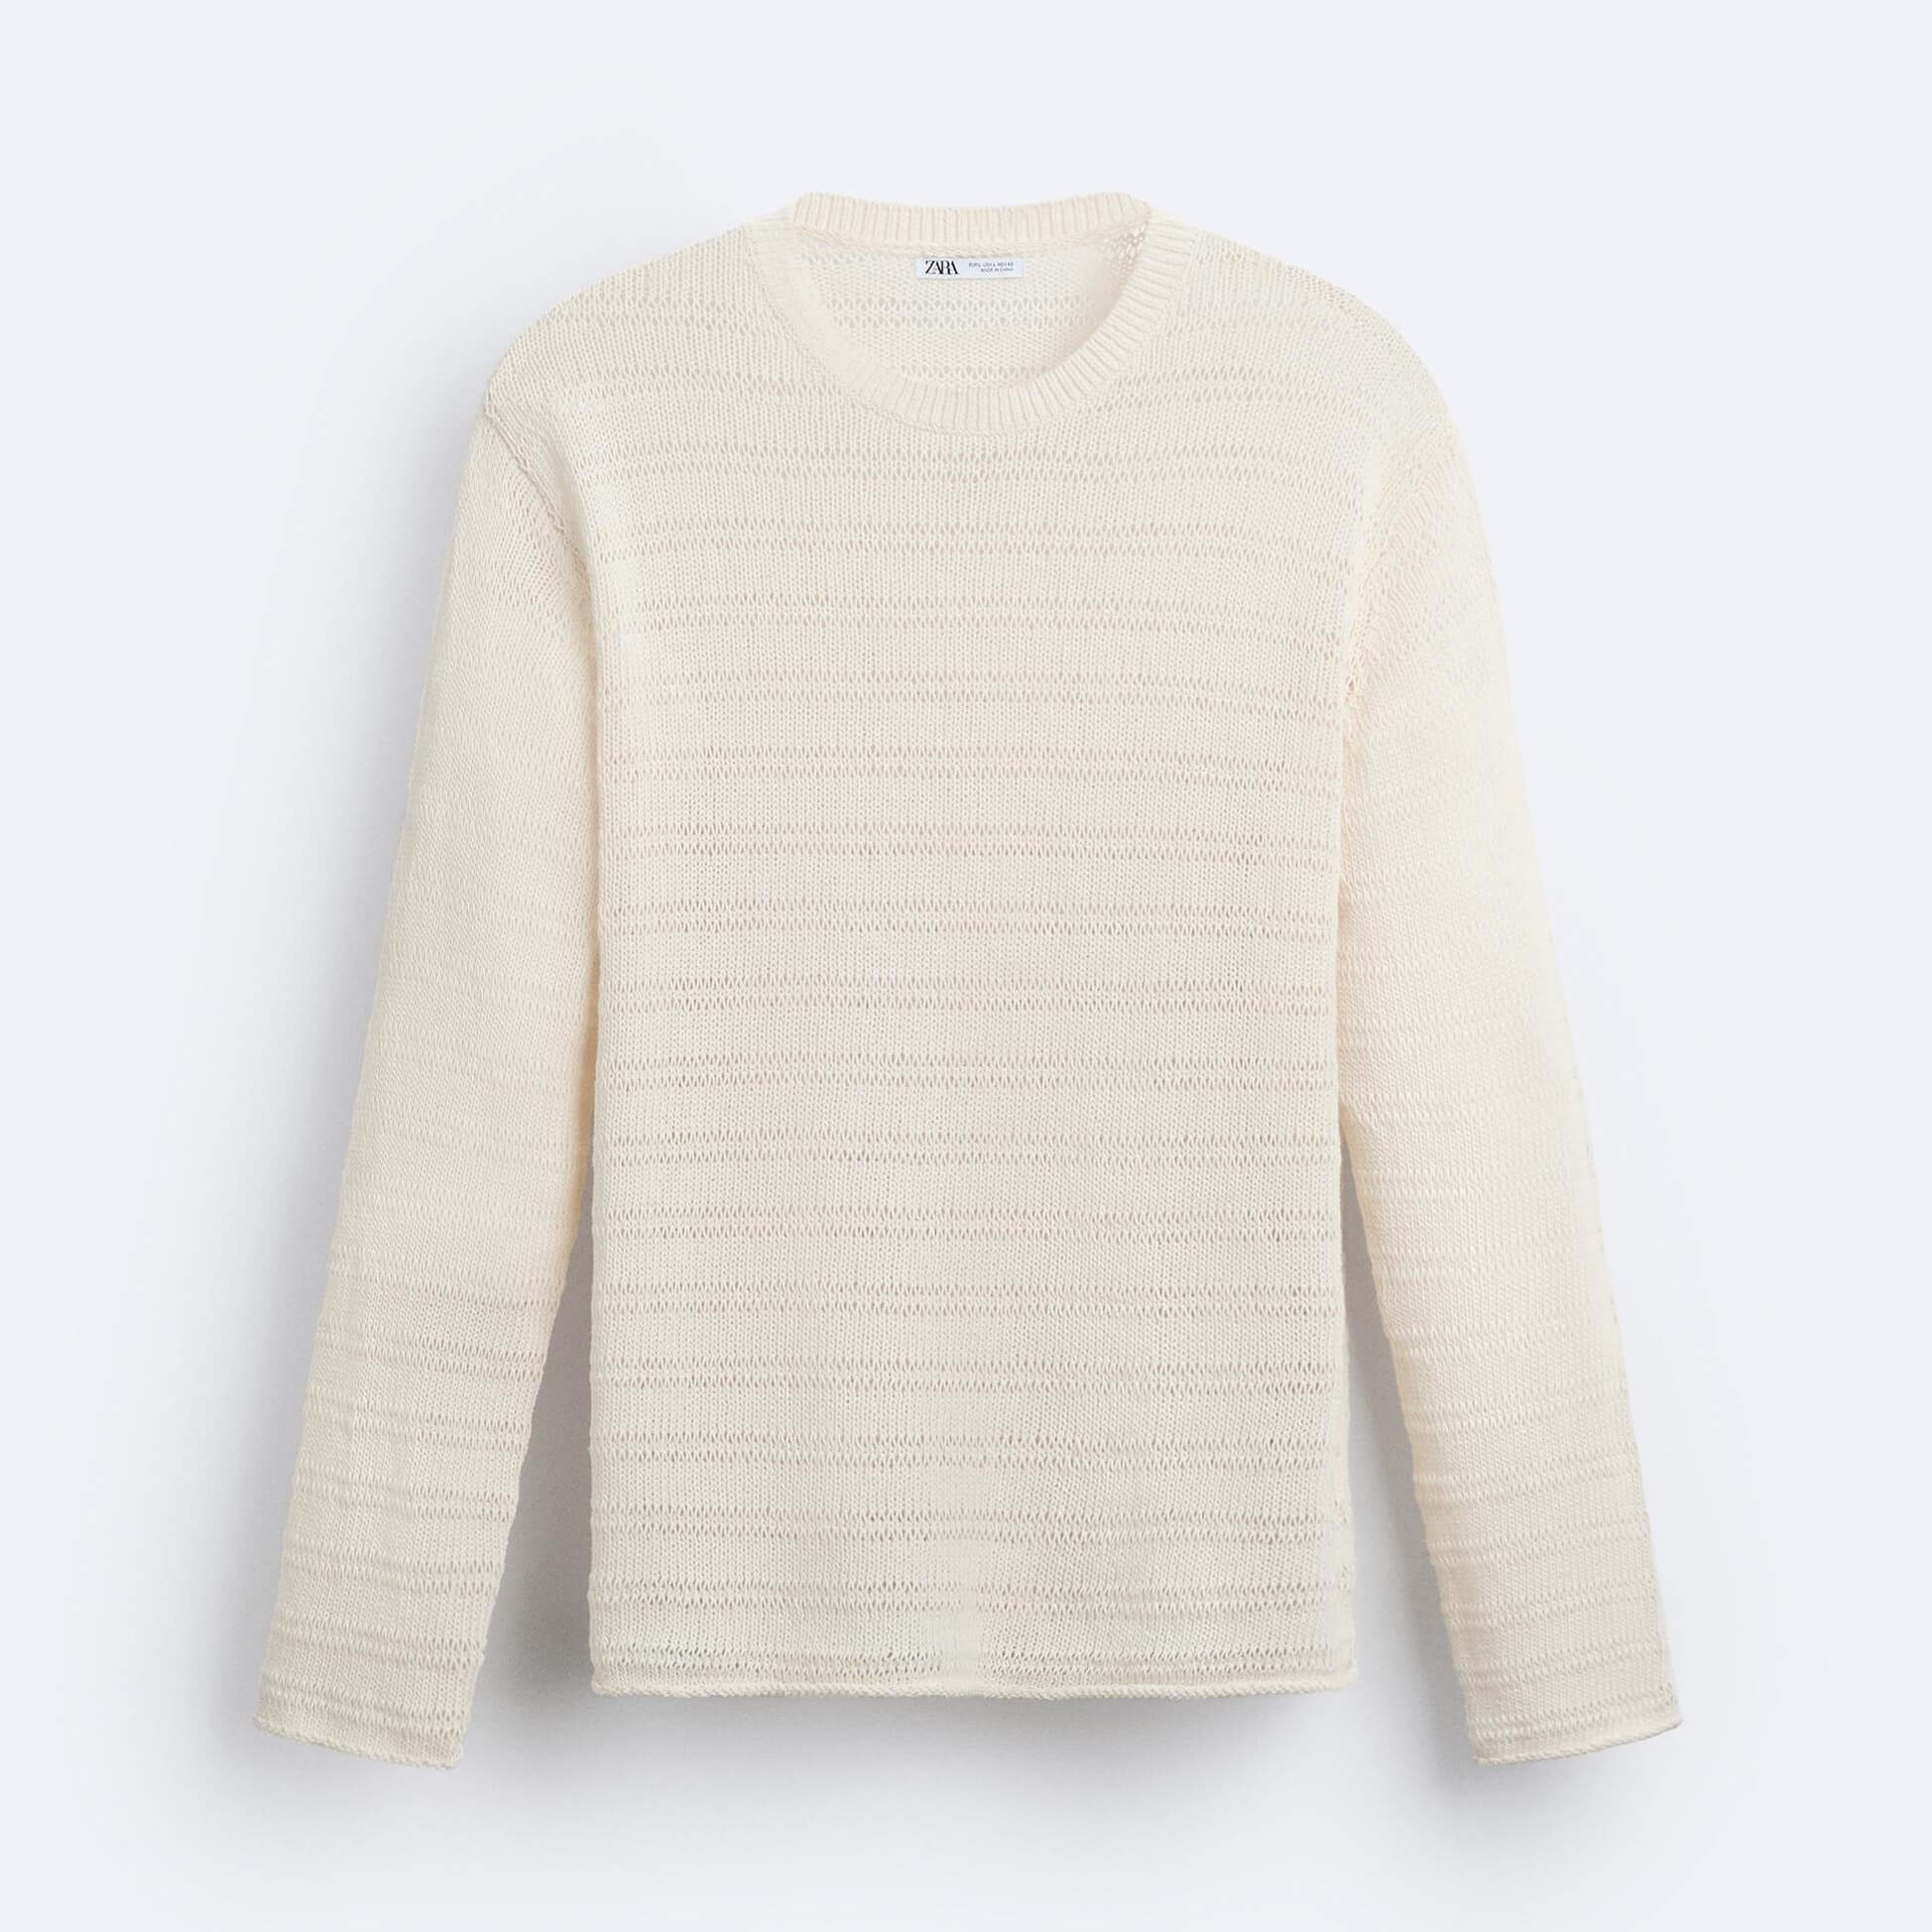 свитер zara textured limited edition светло бежевый Свитер Zara Textured Open-knit, светло-бежевый